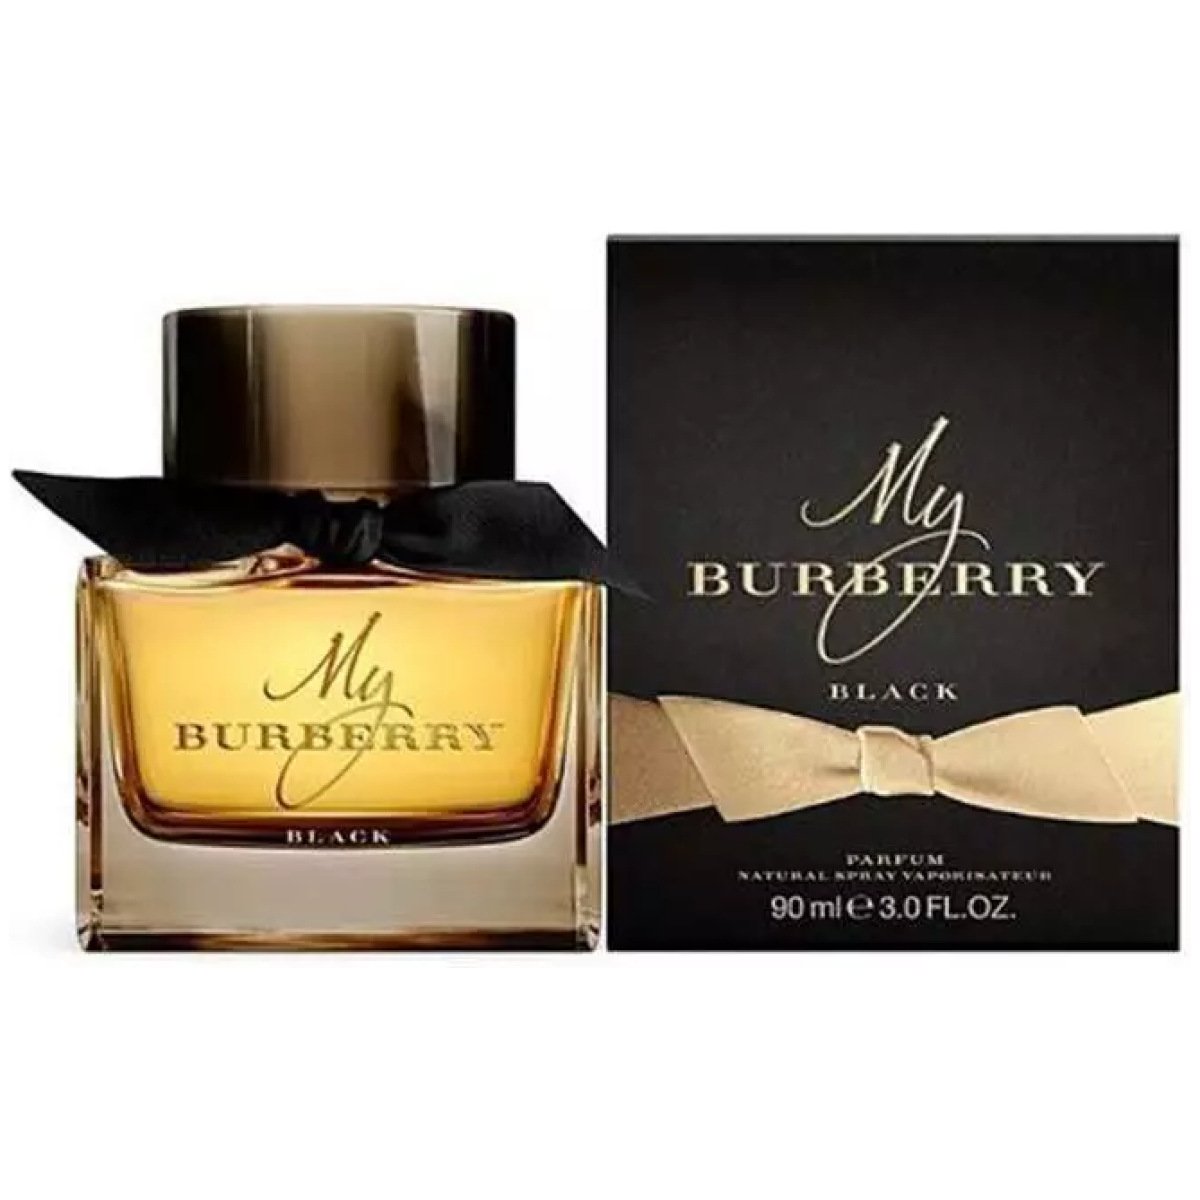 My Burberry Black EDP Perfume For Women 90ml